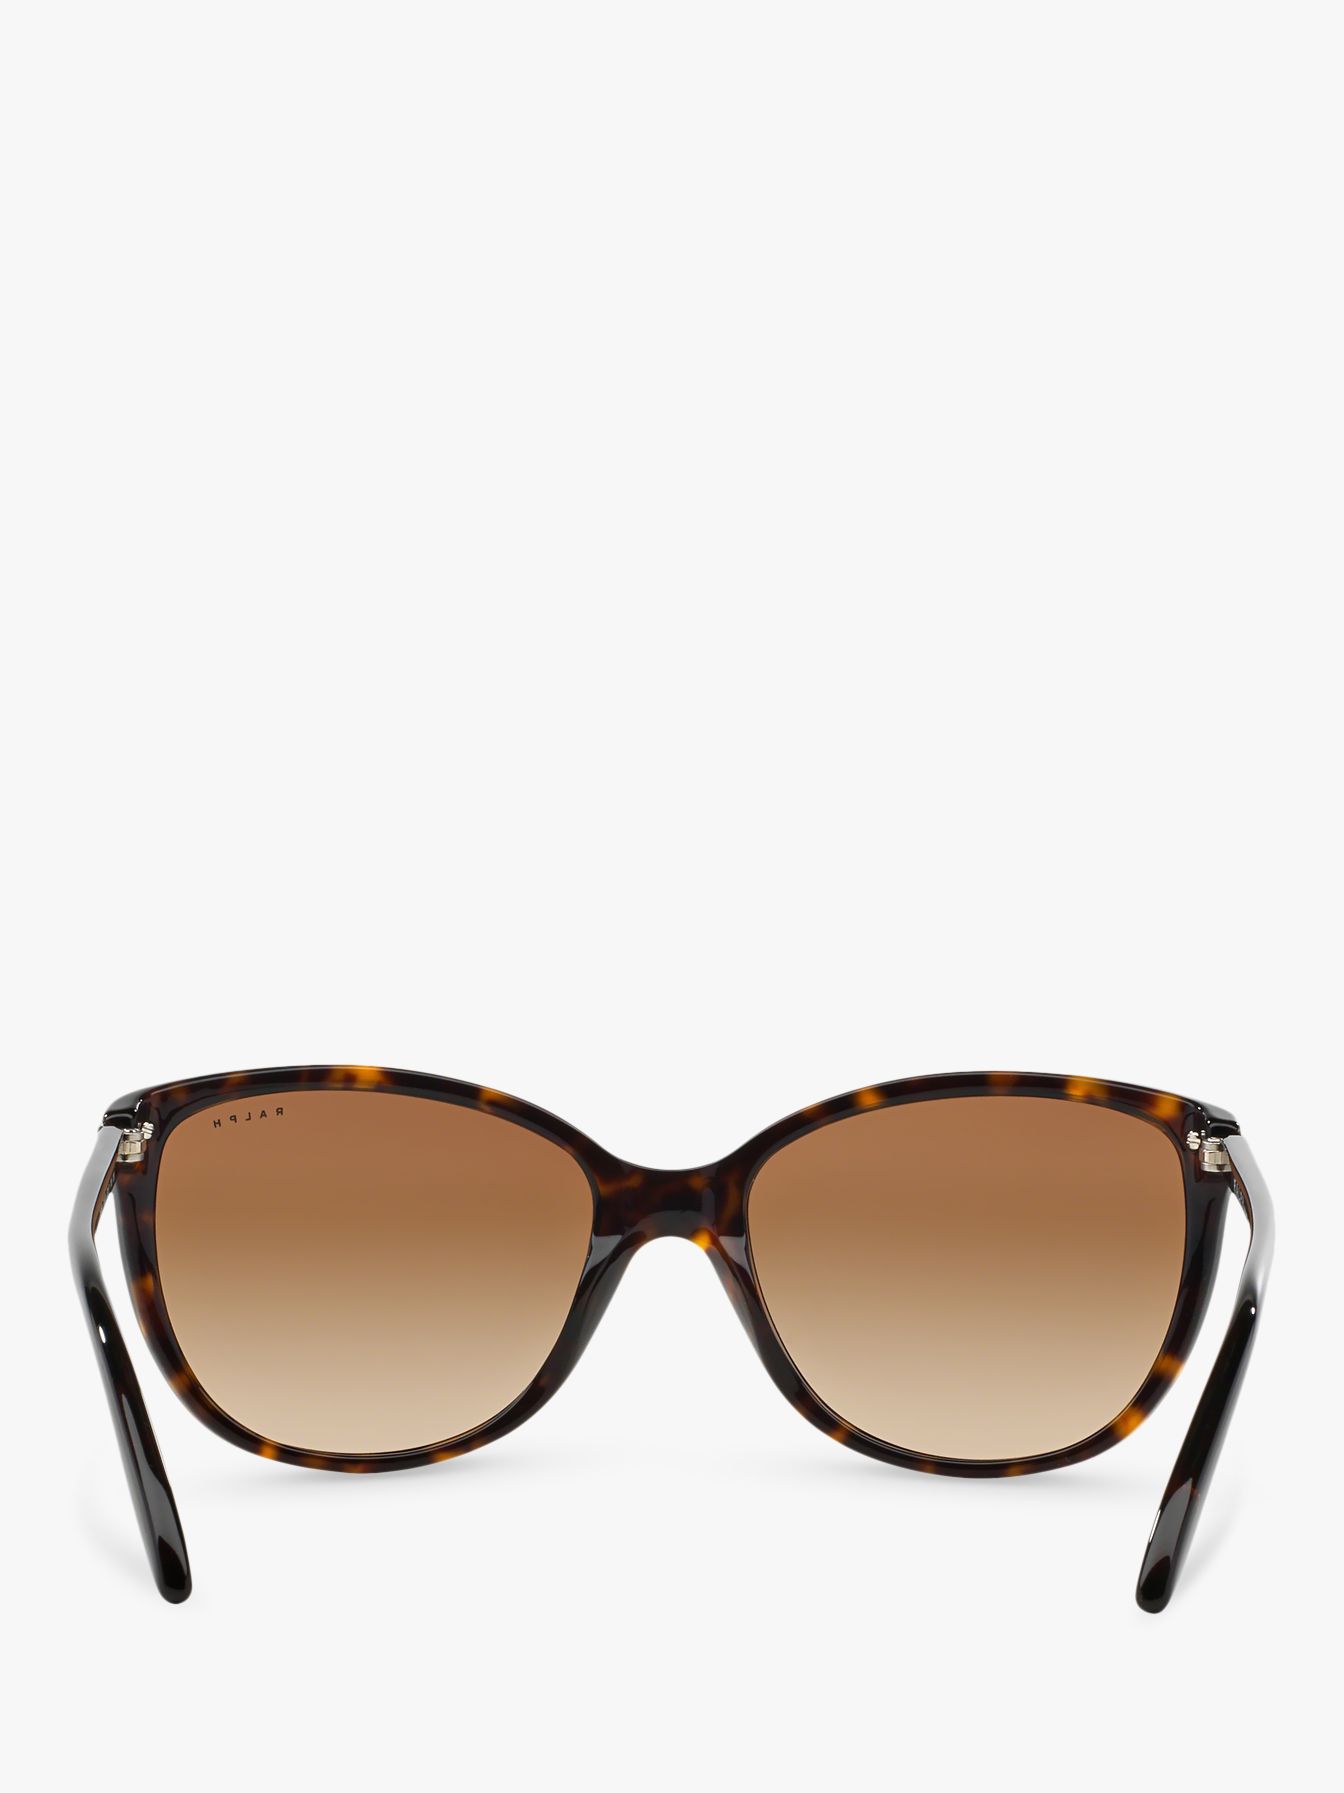 Polo Ralph Lauren RA5160 Women's Cat's Eye Sunglasses, Dark Tortoise ...